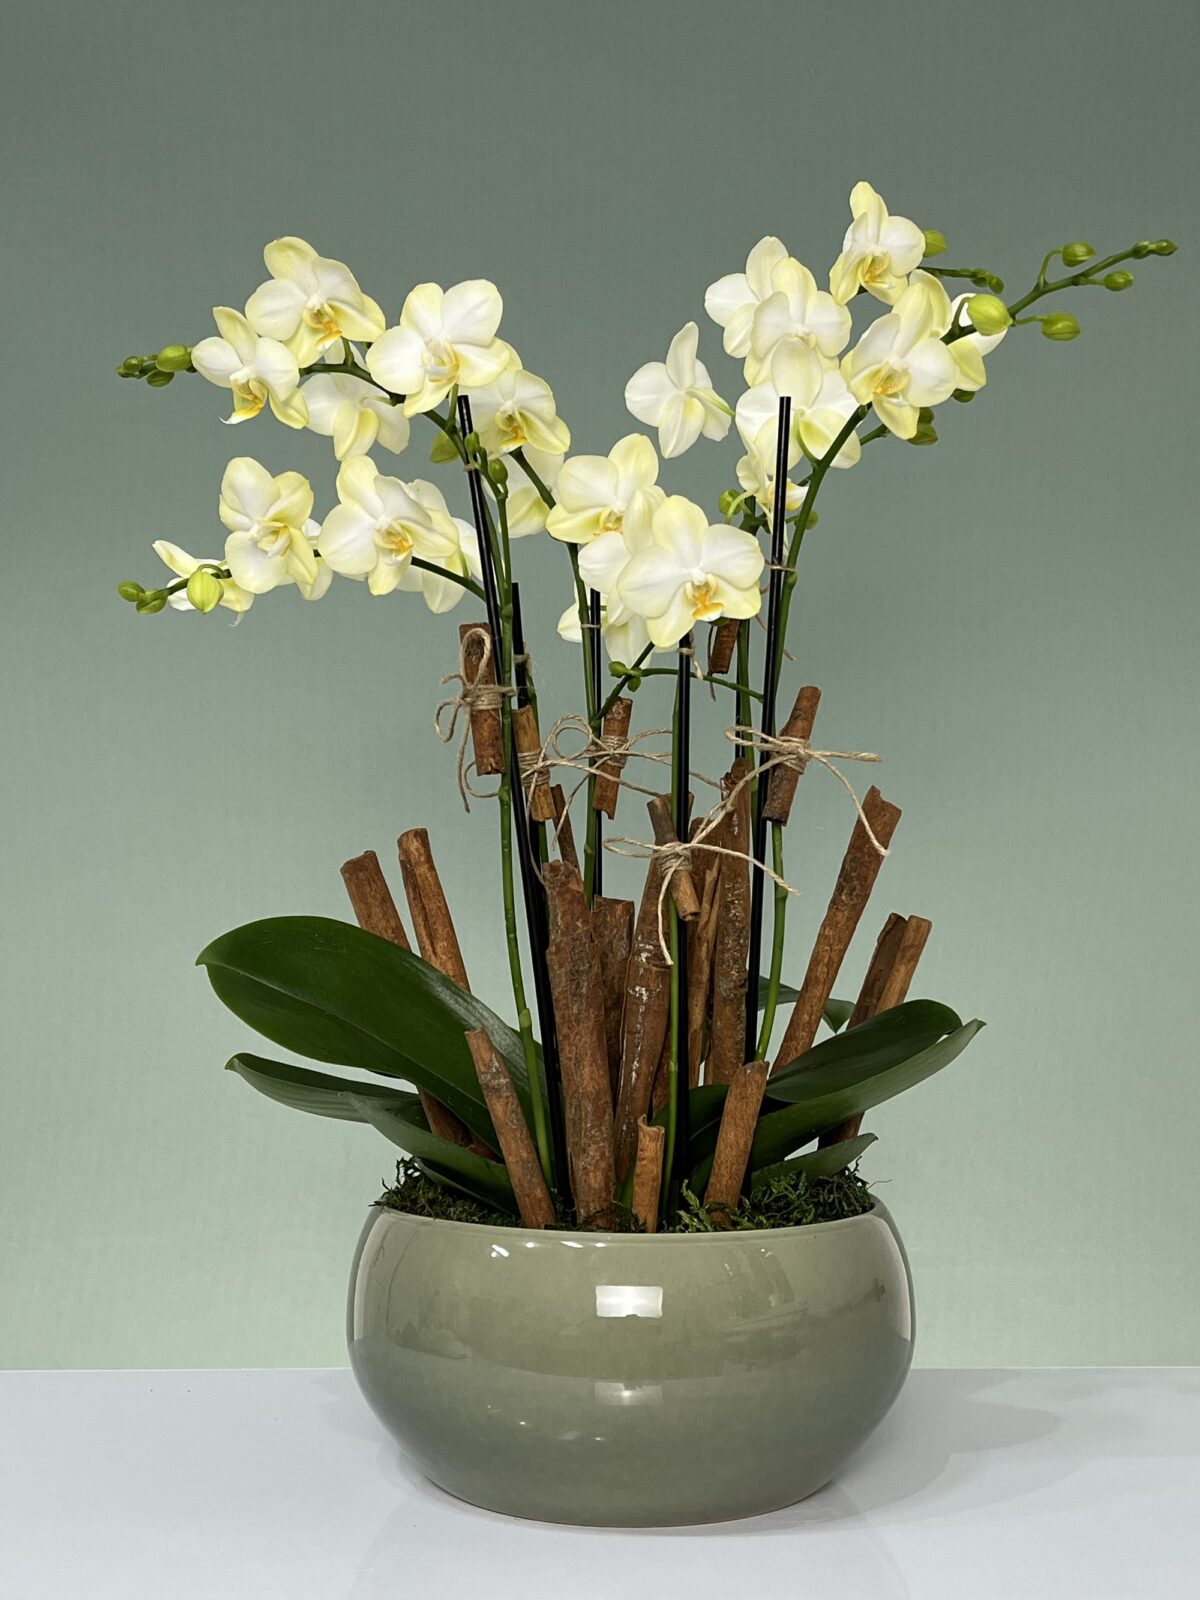 jawa arranjo de orquideas phalaenopsis amarelas arquitetura das flores porto alegre scaled